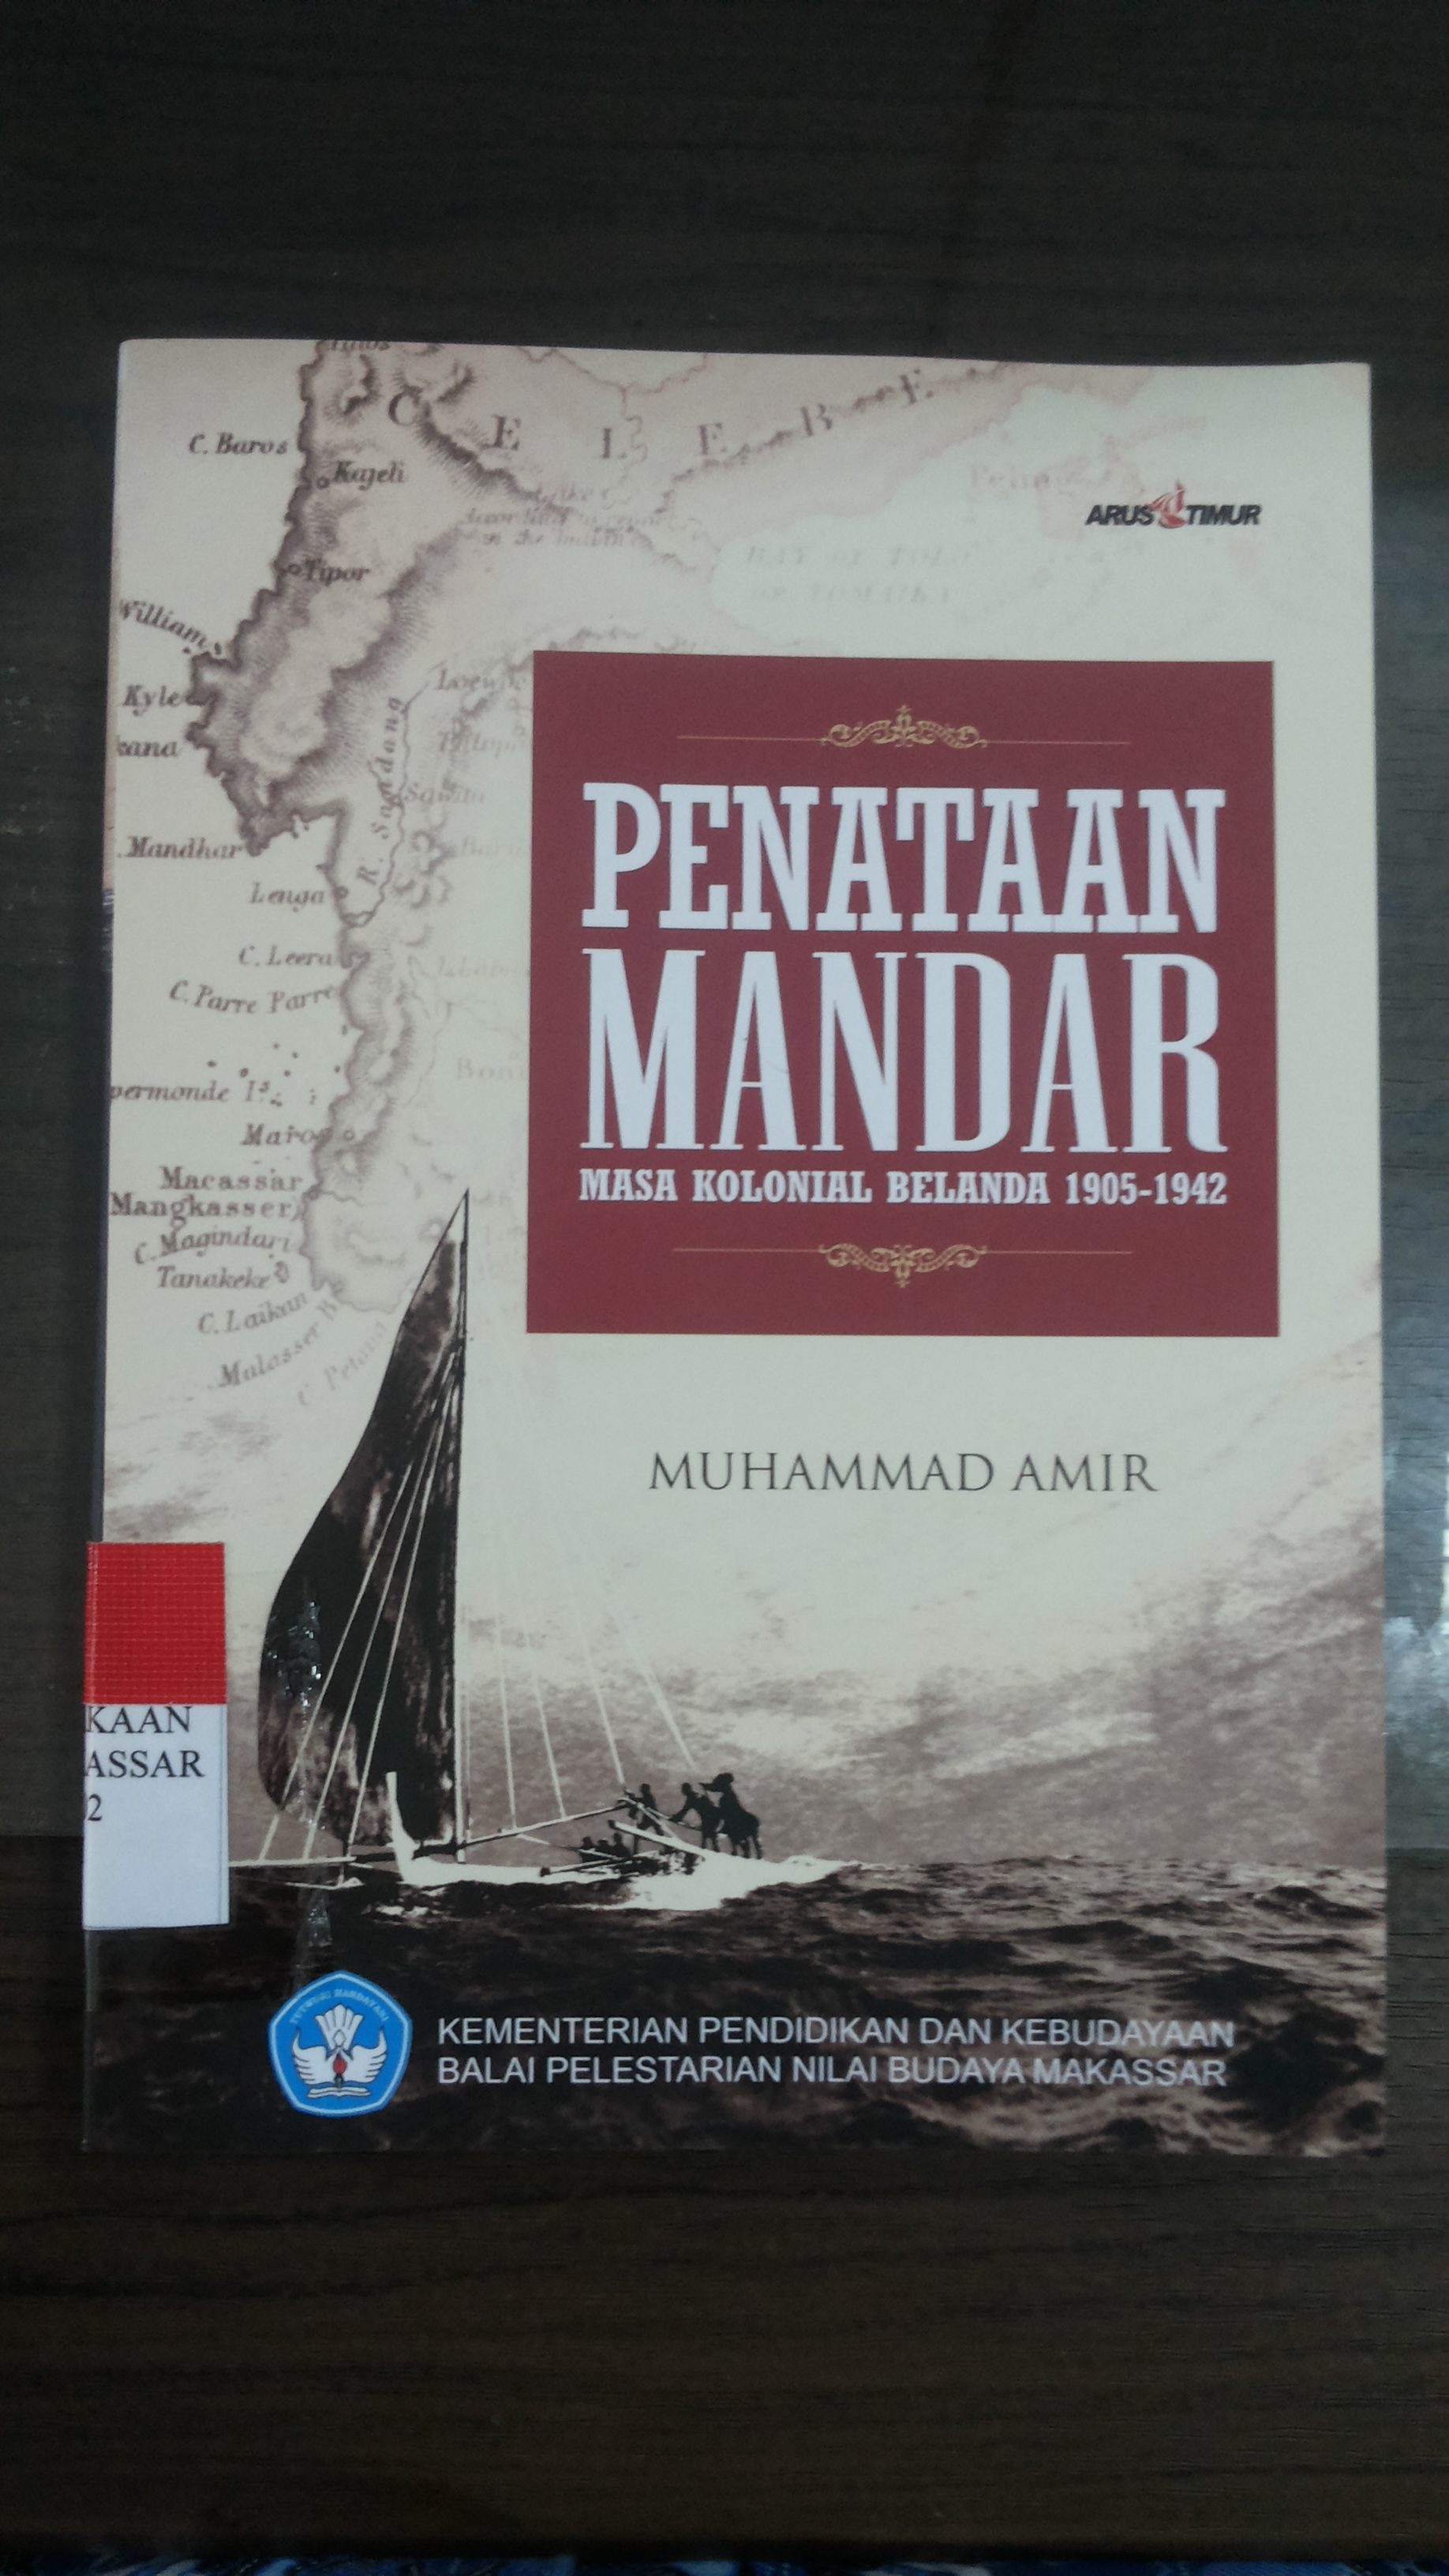 You are currently viewing Penataan Mandar Masa Kolonial Belanda 1905-1942